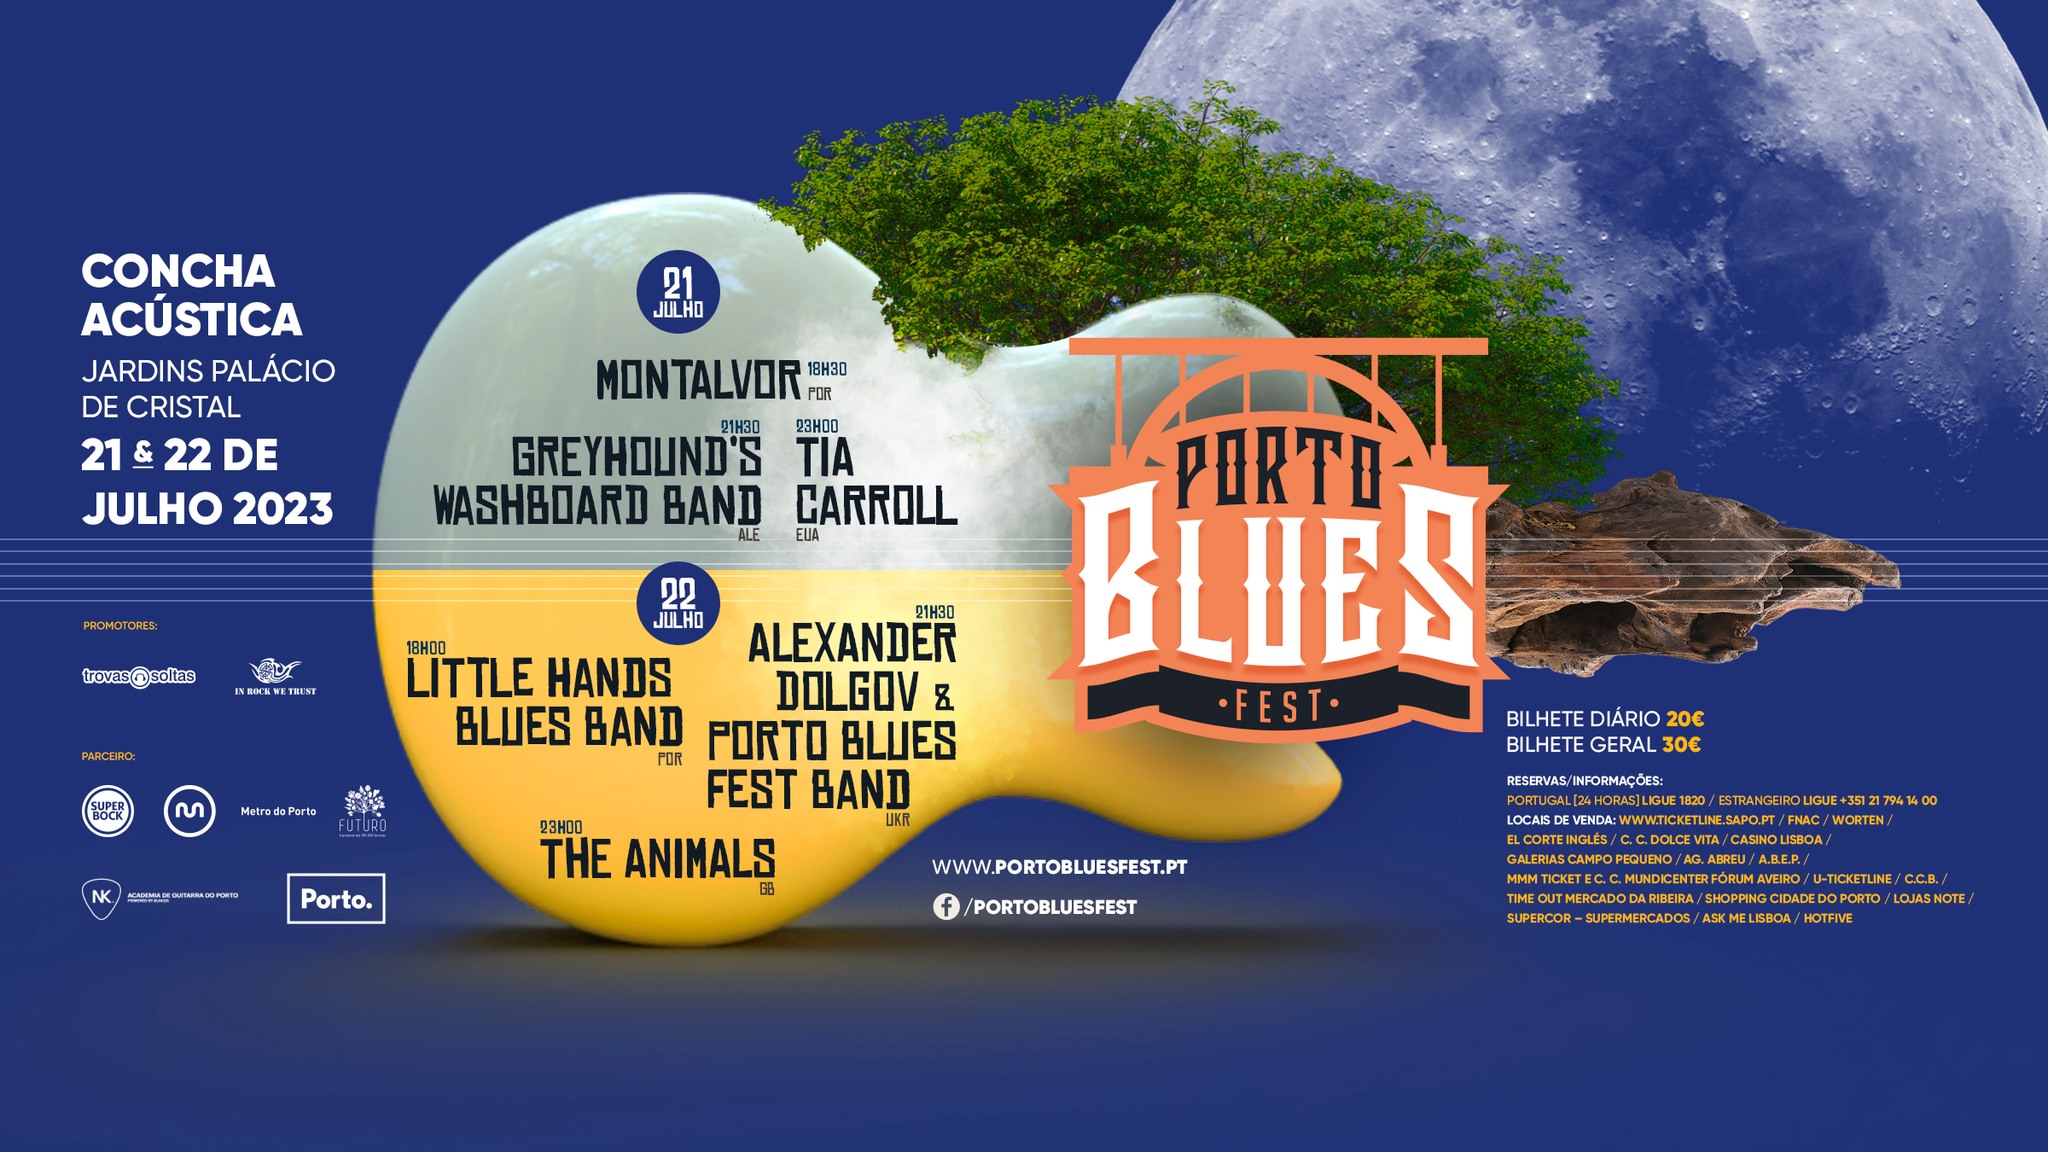 Visit Porto Porto Blues Fest